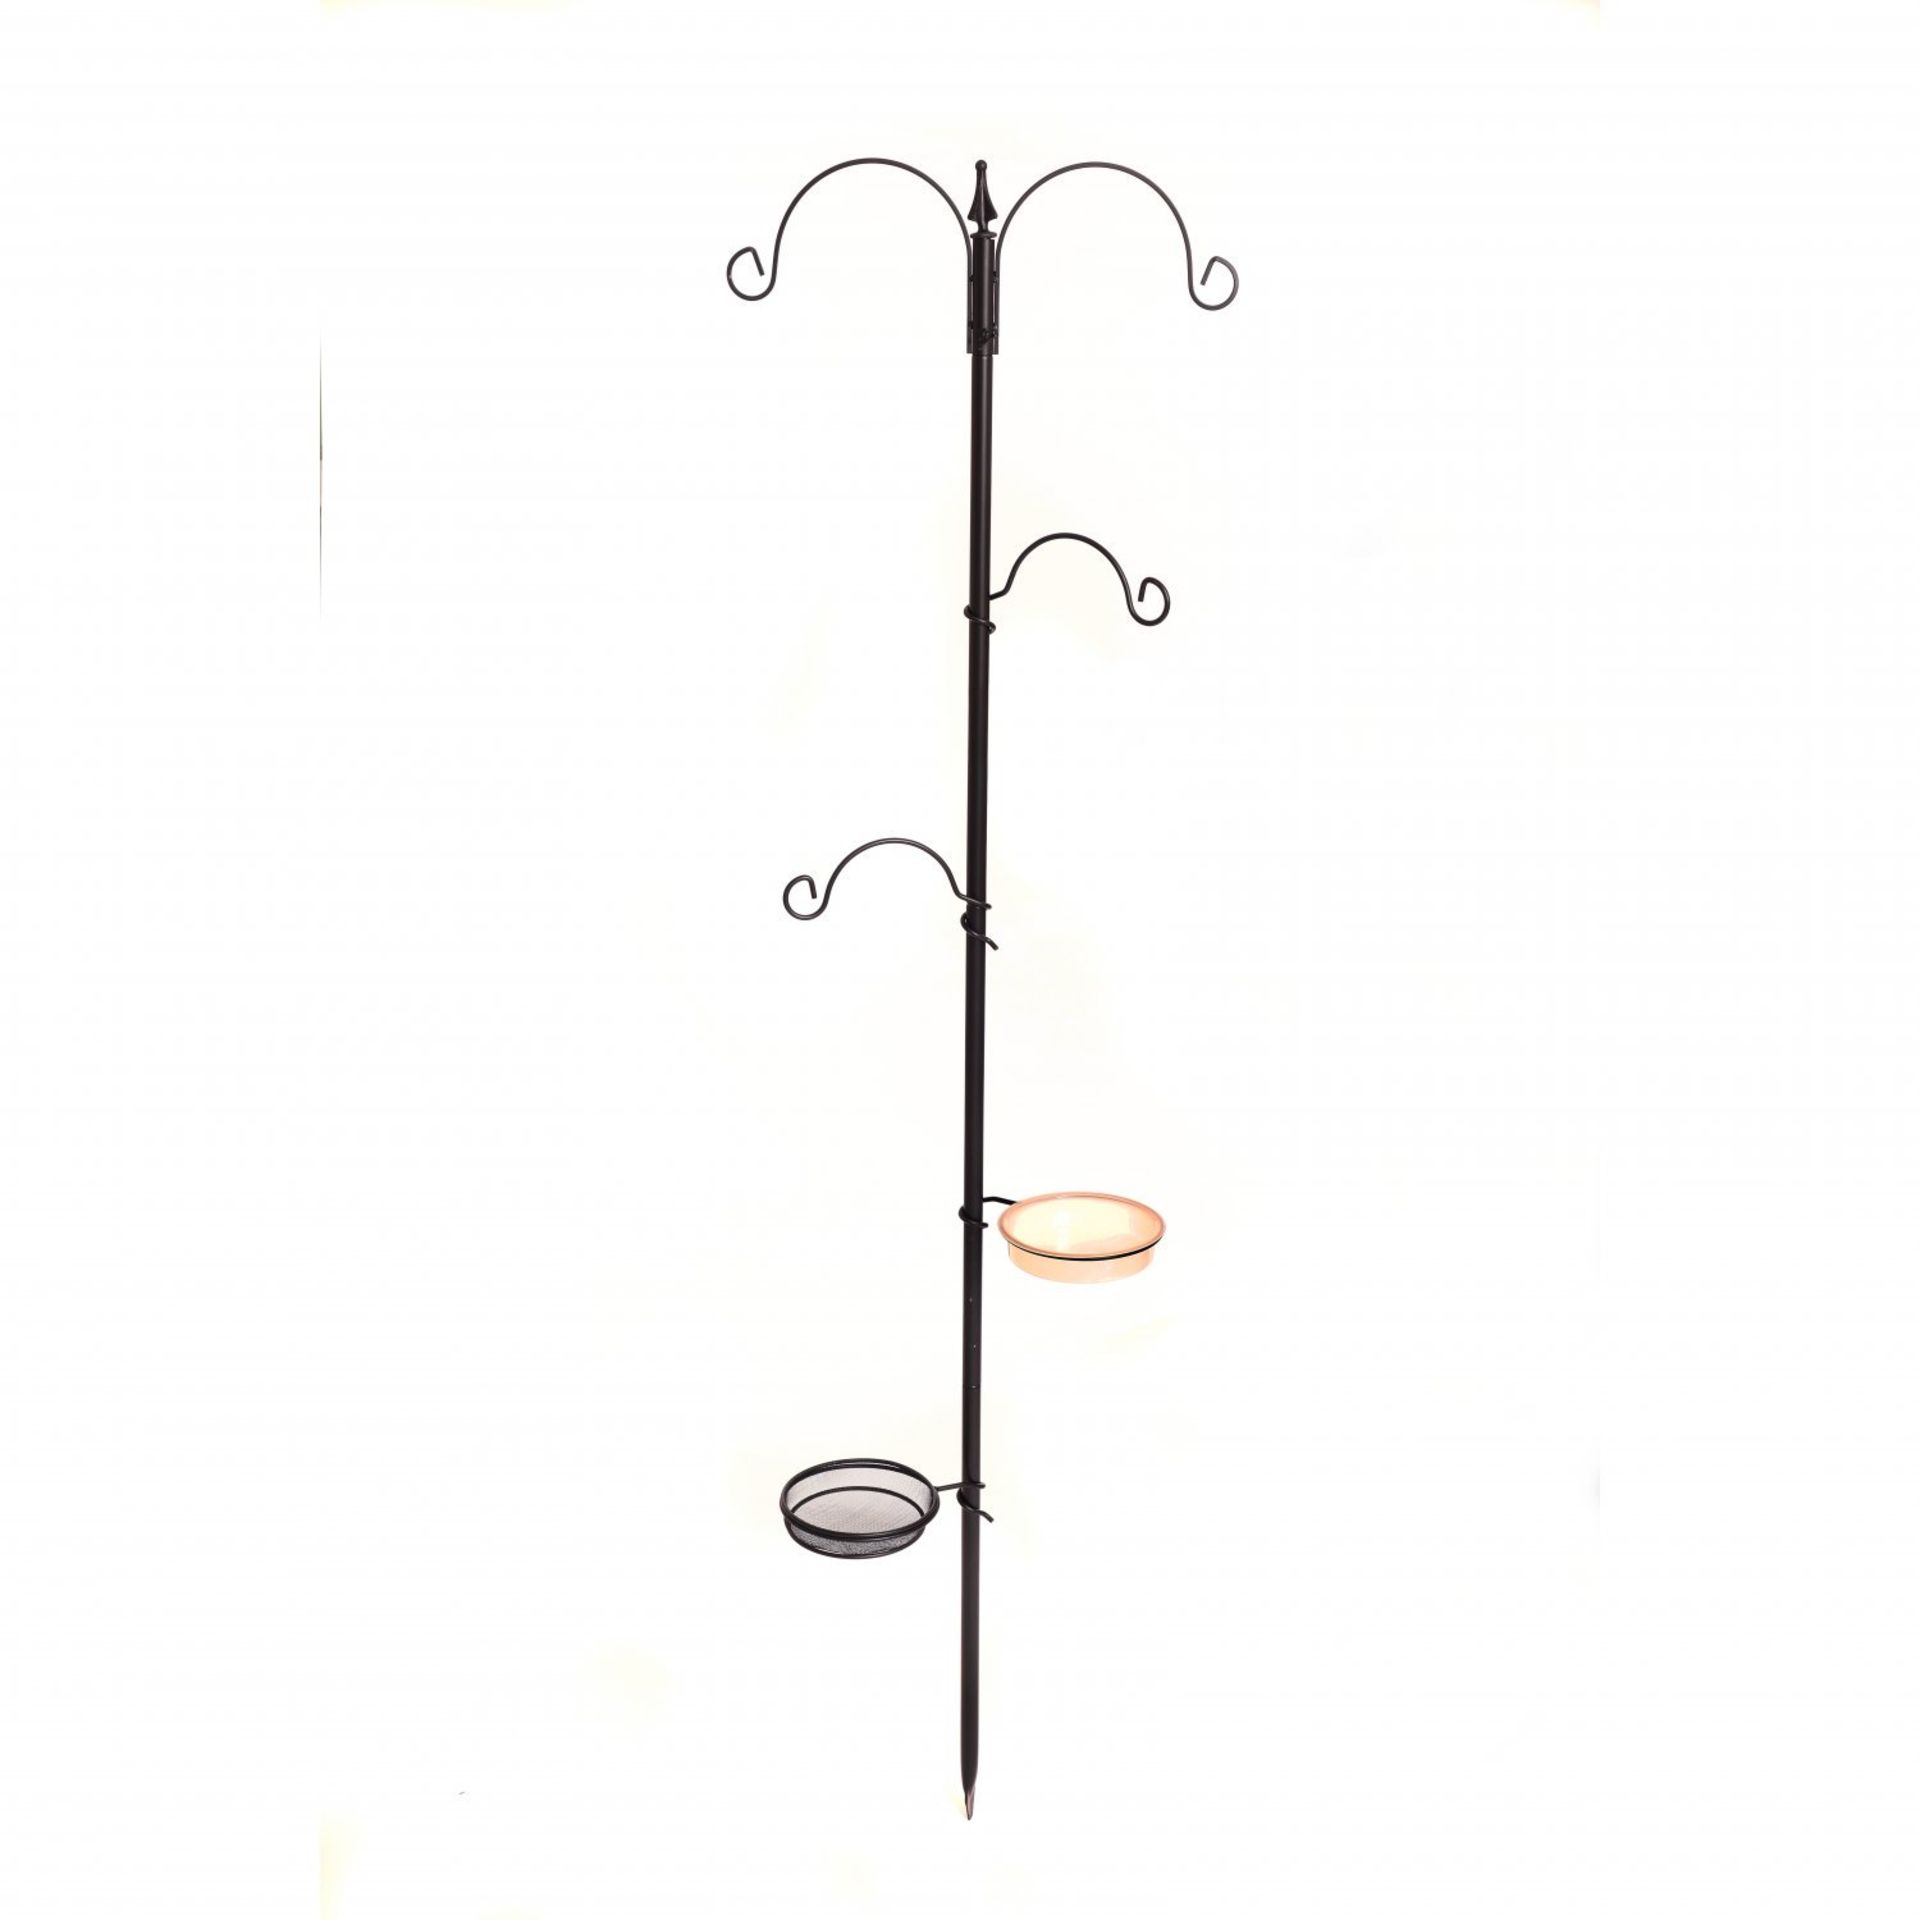 (EE537) Wild Bird Decorative Feeding Station with Feeder Tray & Bath 4 Hooks to Hang Feeders (... - Image 2 of 3